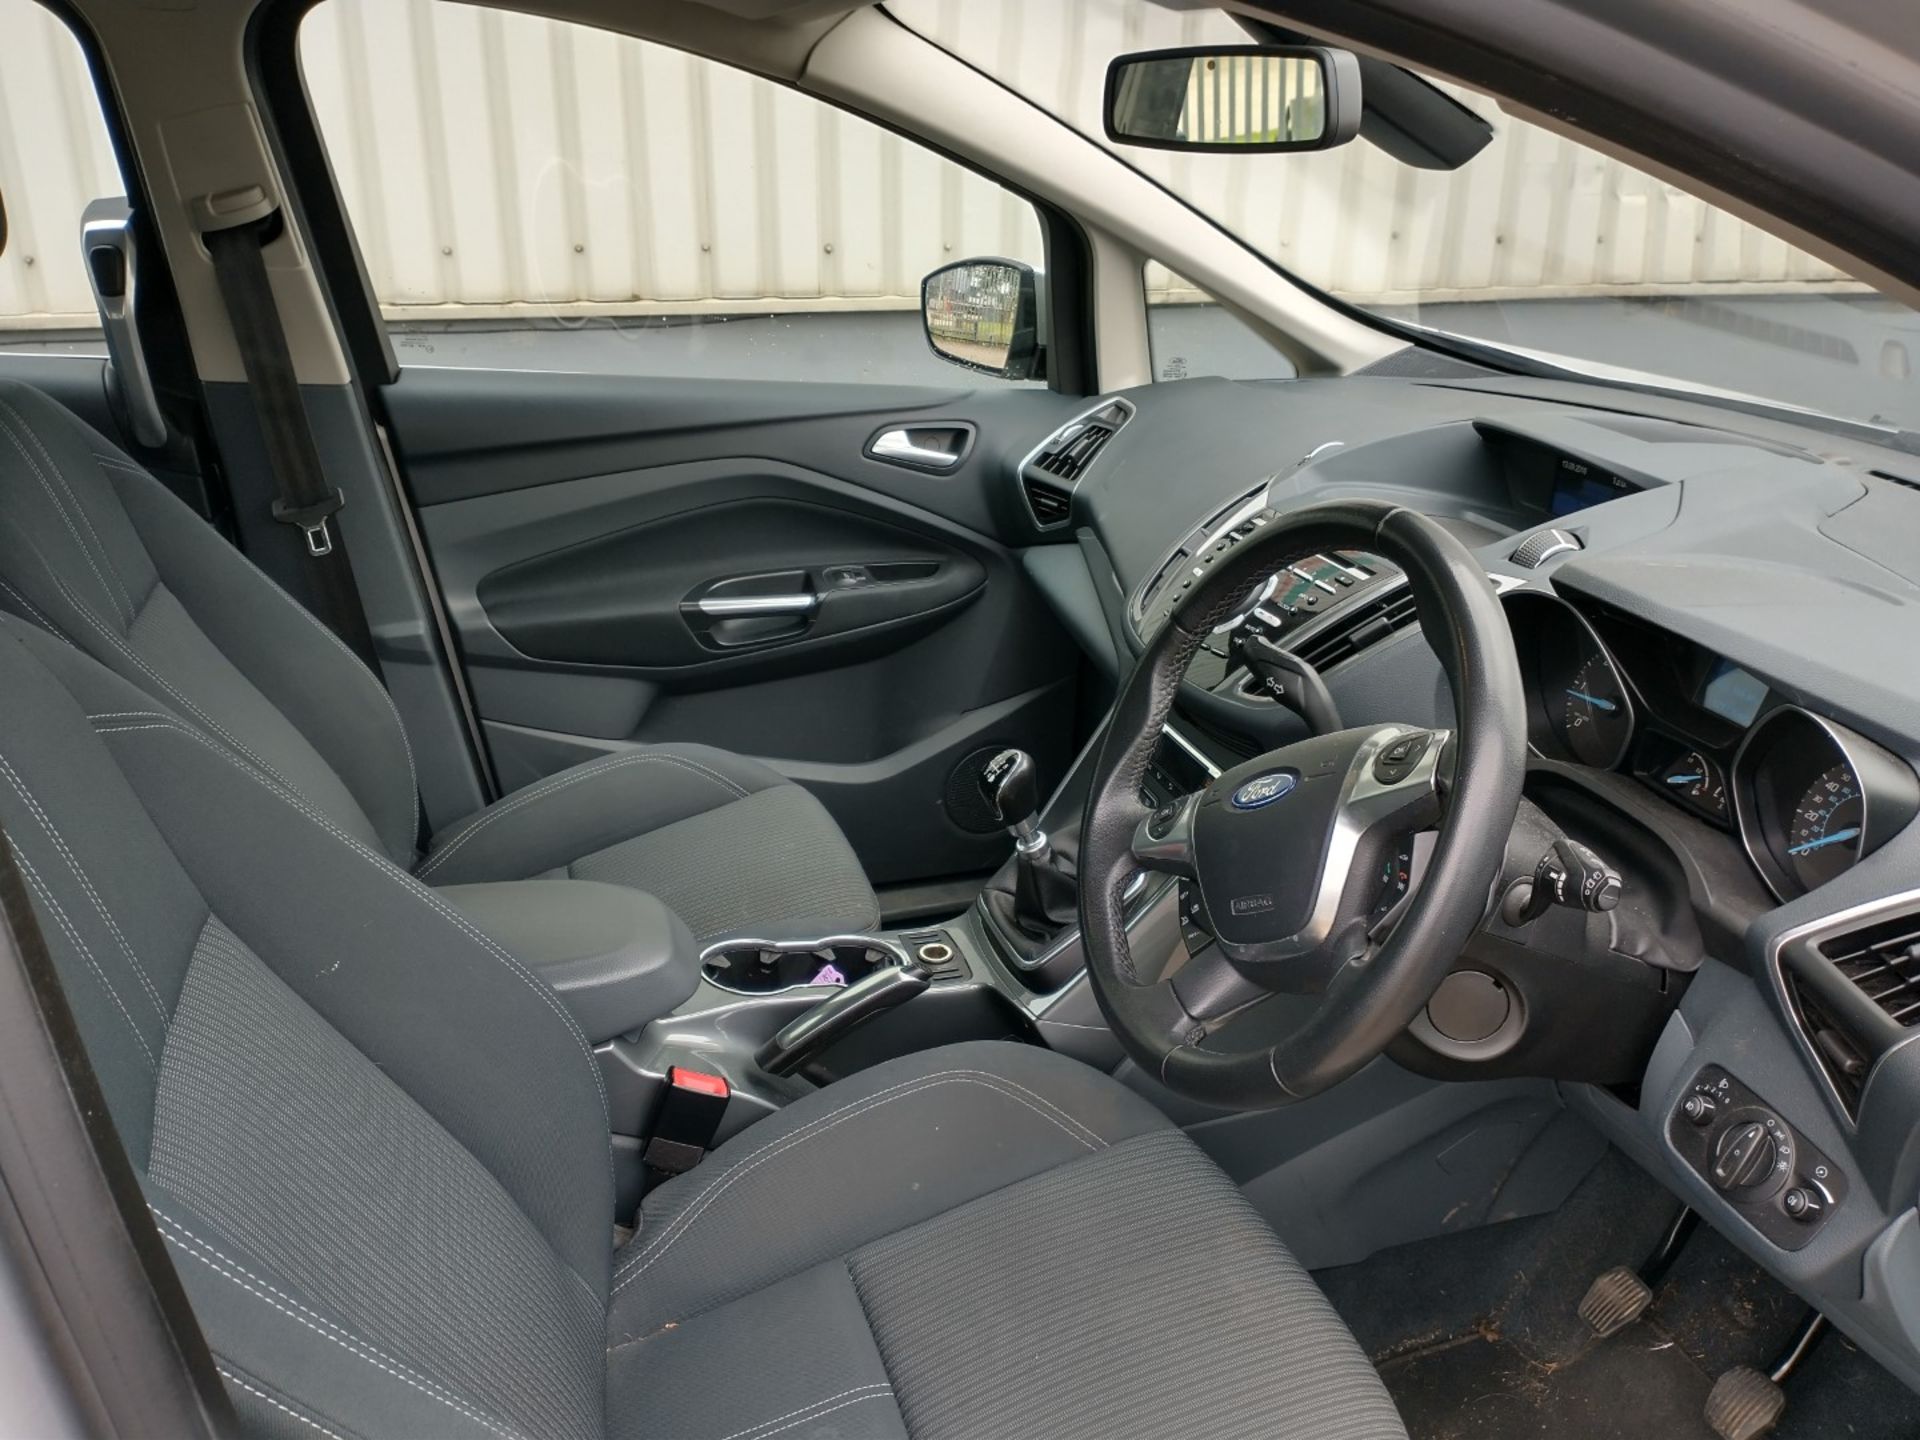 2012 Ford Grand C-Max Titanium Tdci 115 7 Seat MPV - CL505 - Ref: VVS0002 - NO VAT ON THE HAMMER - L - Image 10 of 20